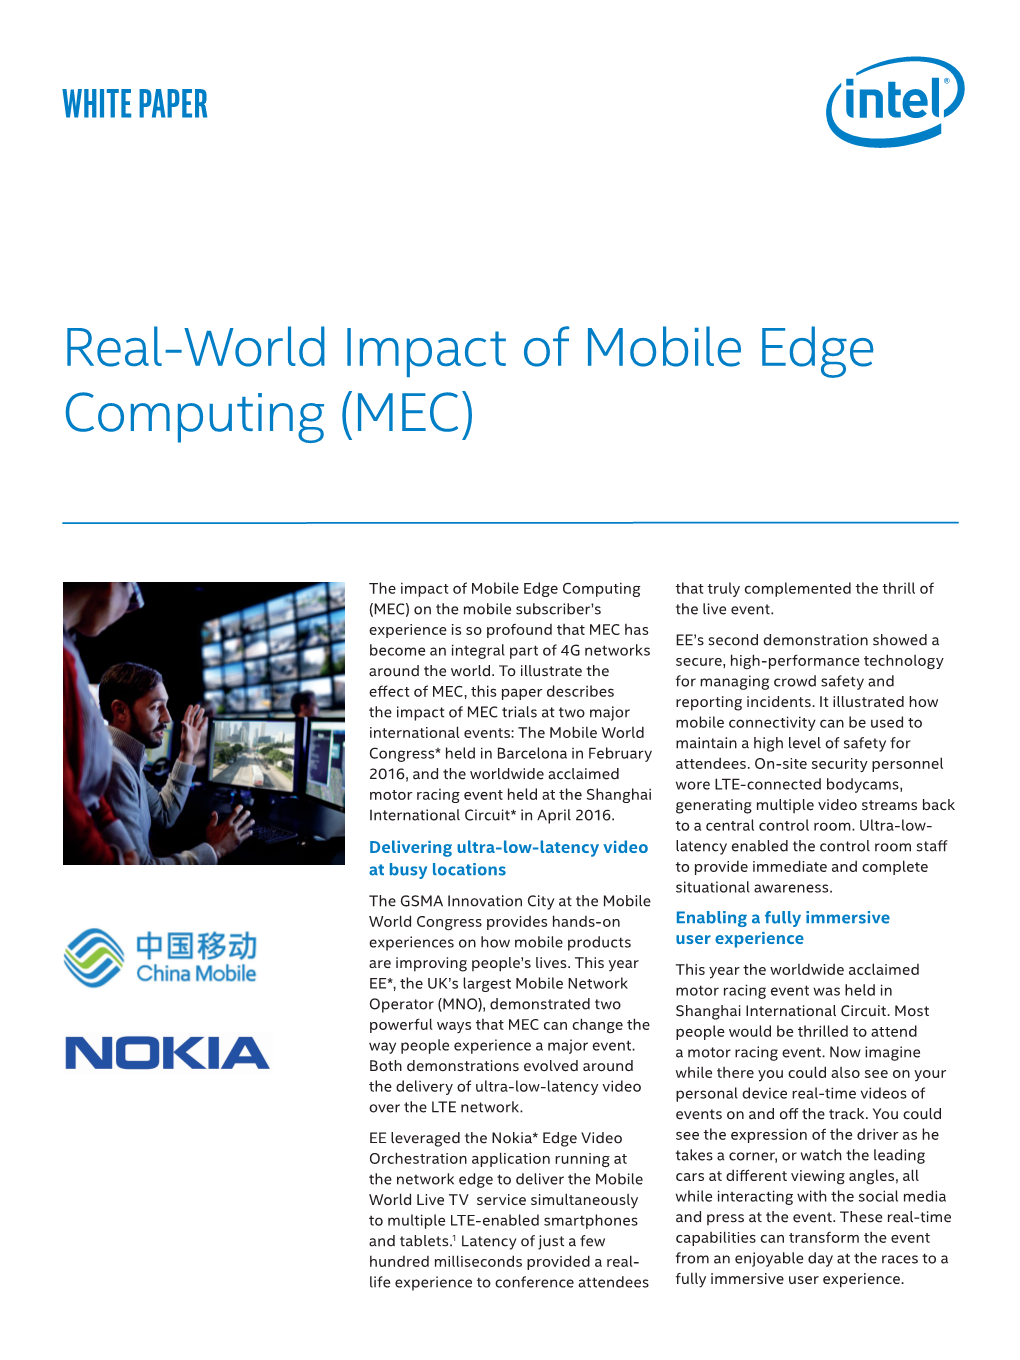 Real-World Impact of Mobile Edge Computing (MEC)